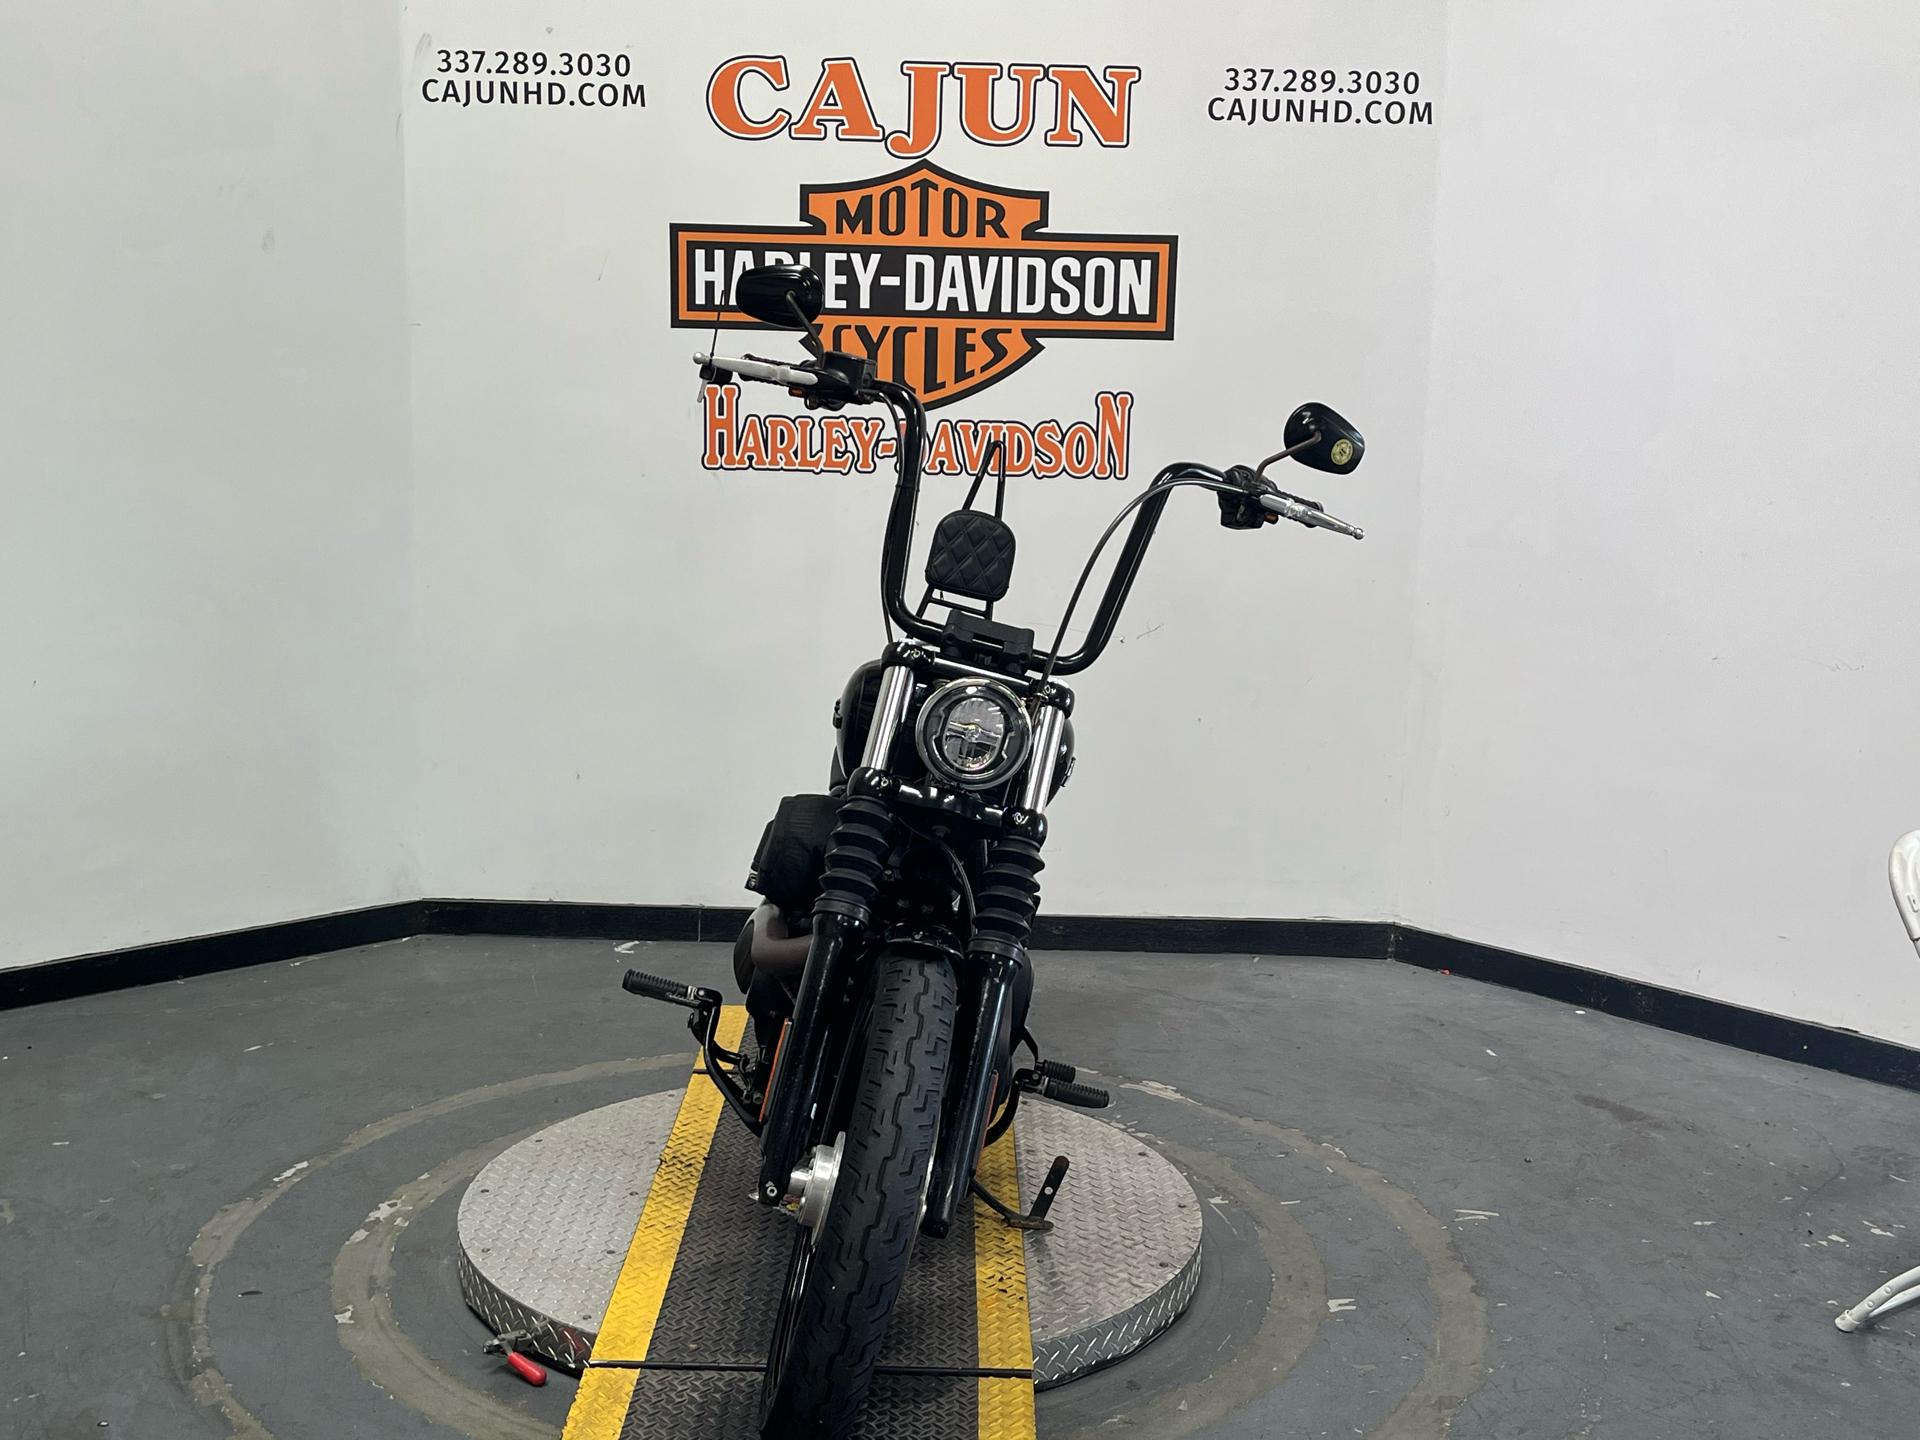 2020 Harley-Davidson Street Bob Lafayette - Photo 7